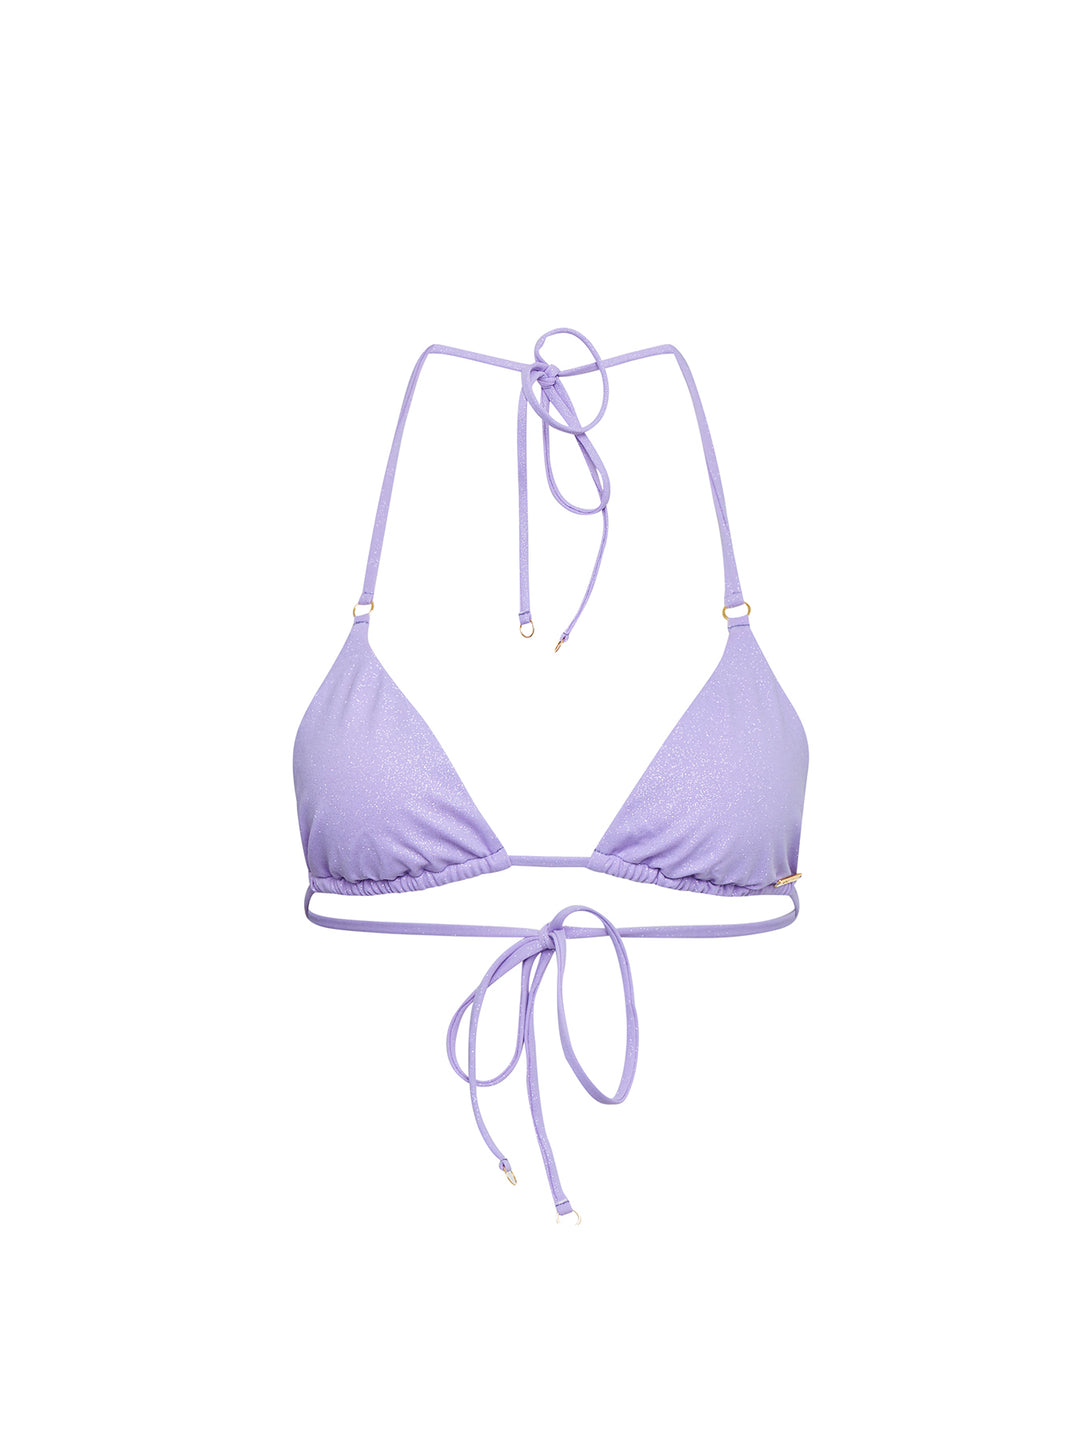 POSITANO - Adjustable Top • Glittery Lavender